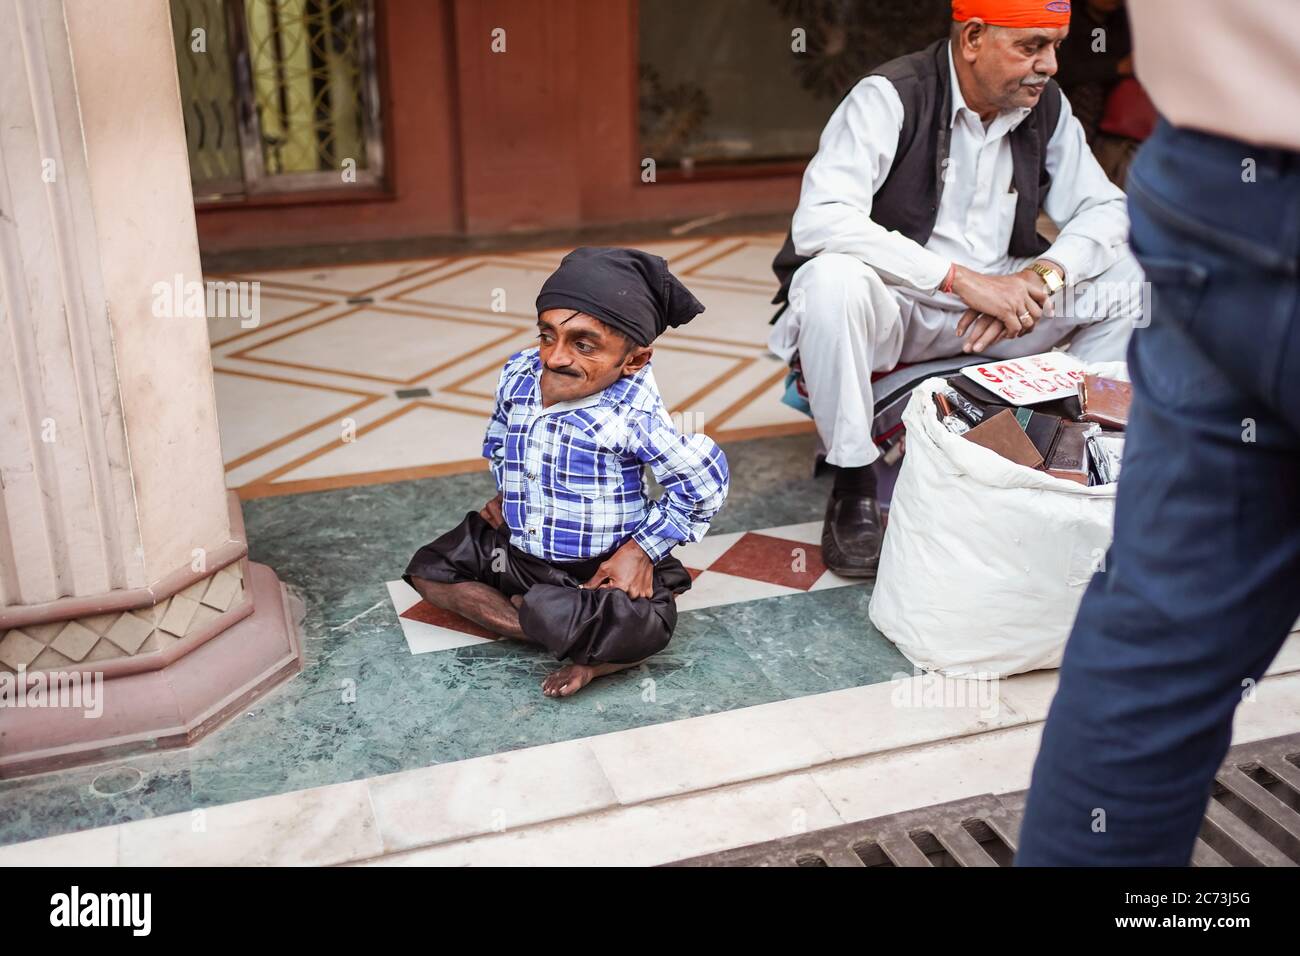 New Delhi / India - February 18, 2020: man with dwarfism begging for money on Delhi street Stock Photo